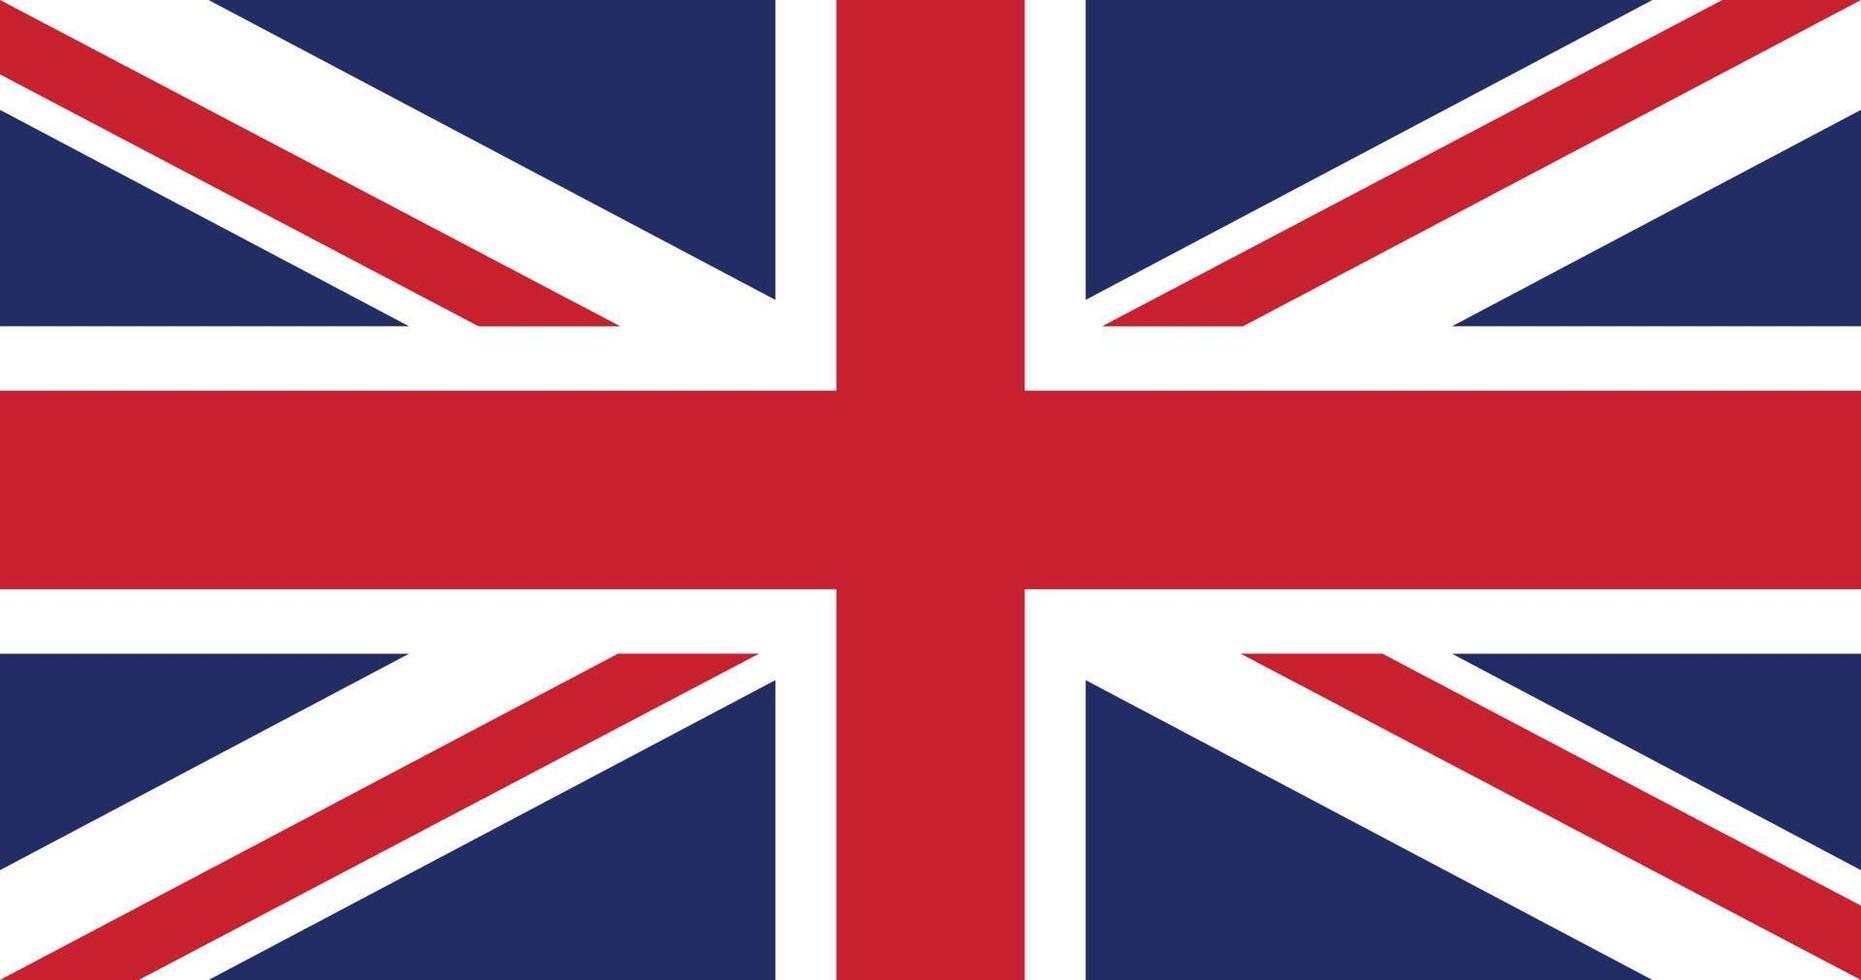 United kingdom flag with original RGB color vector illustration design